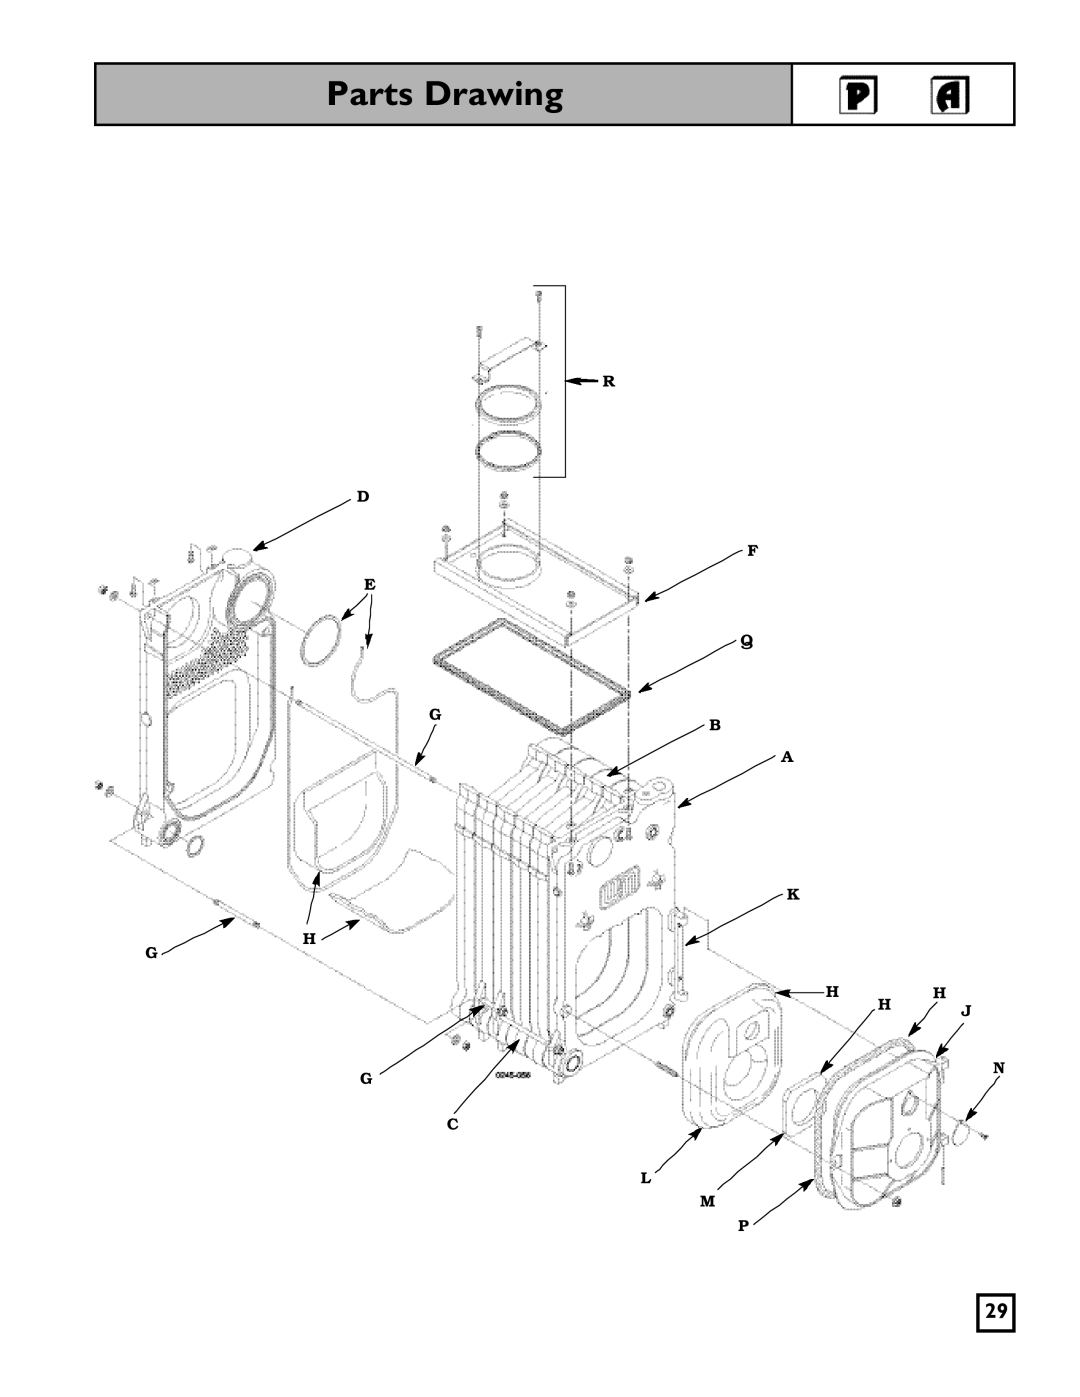 Weil-McLain 550-141-826/1201 manual Parts Drawing, D E G H G, F Q B A K, C L M P 